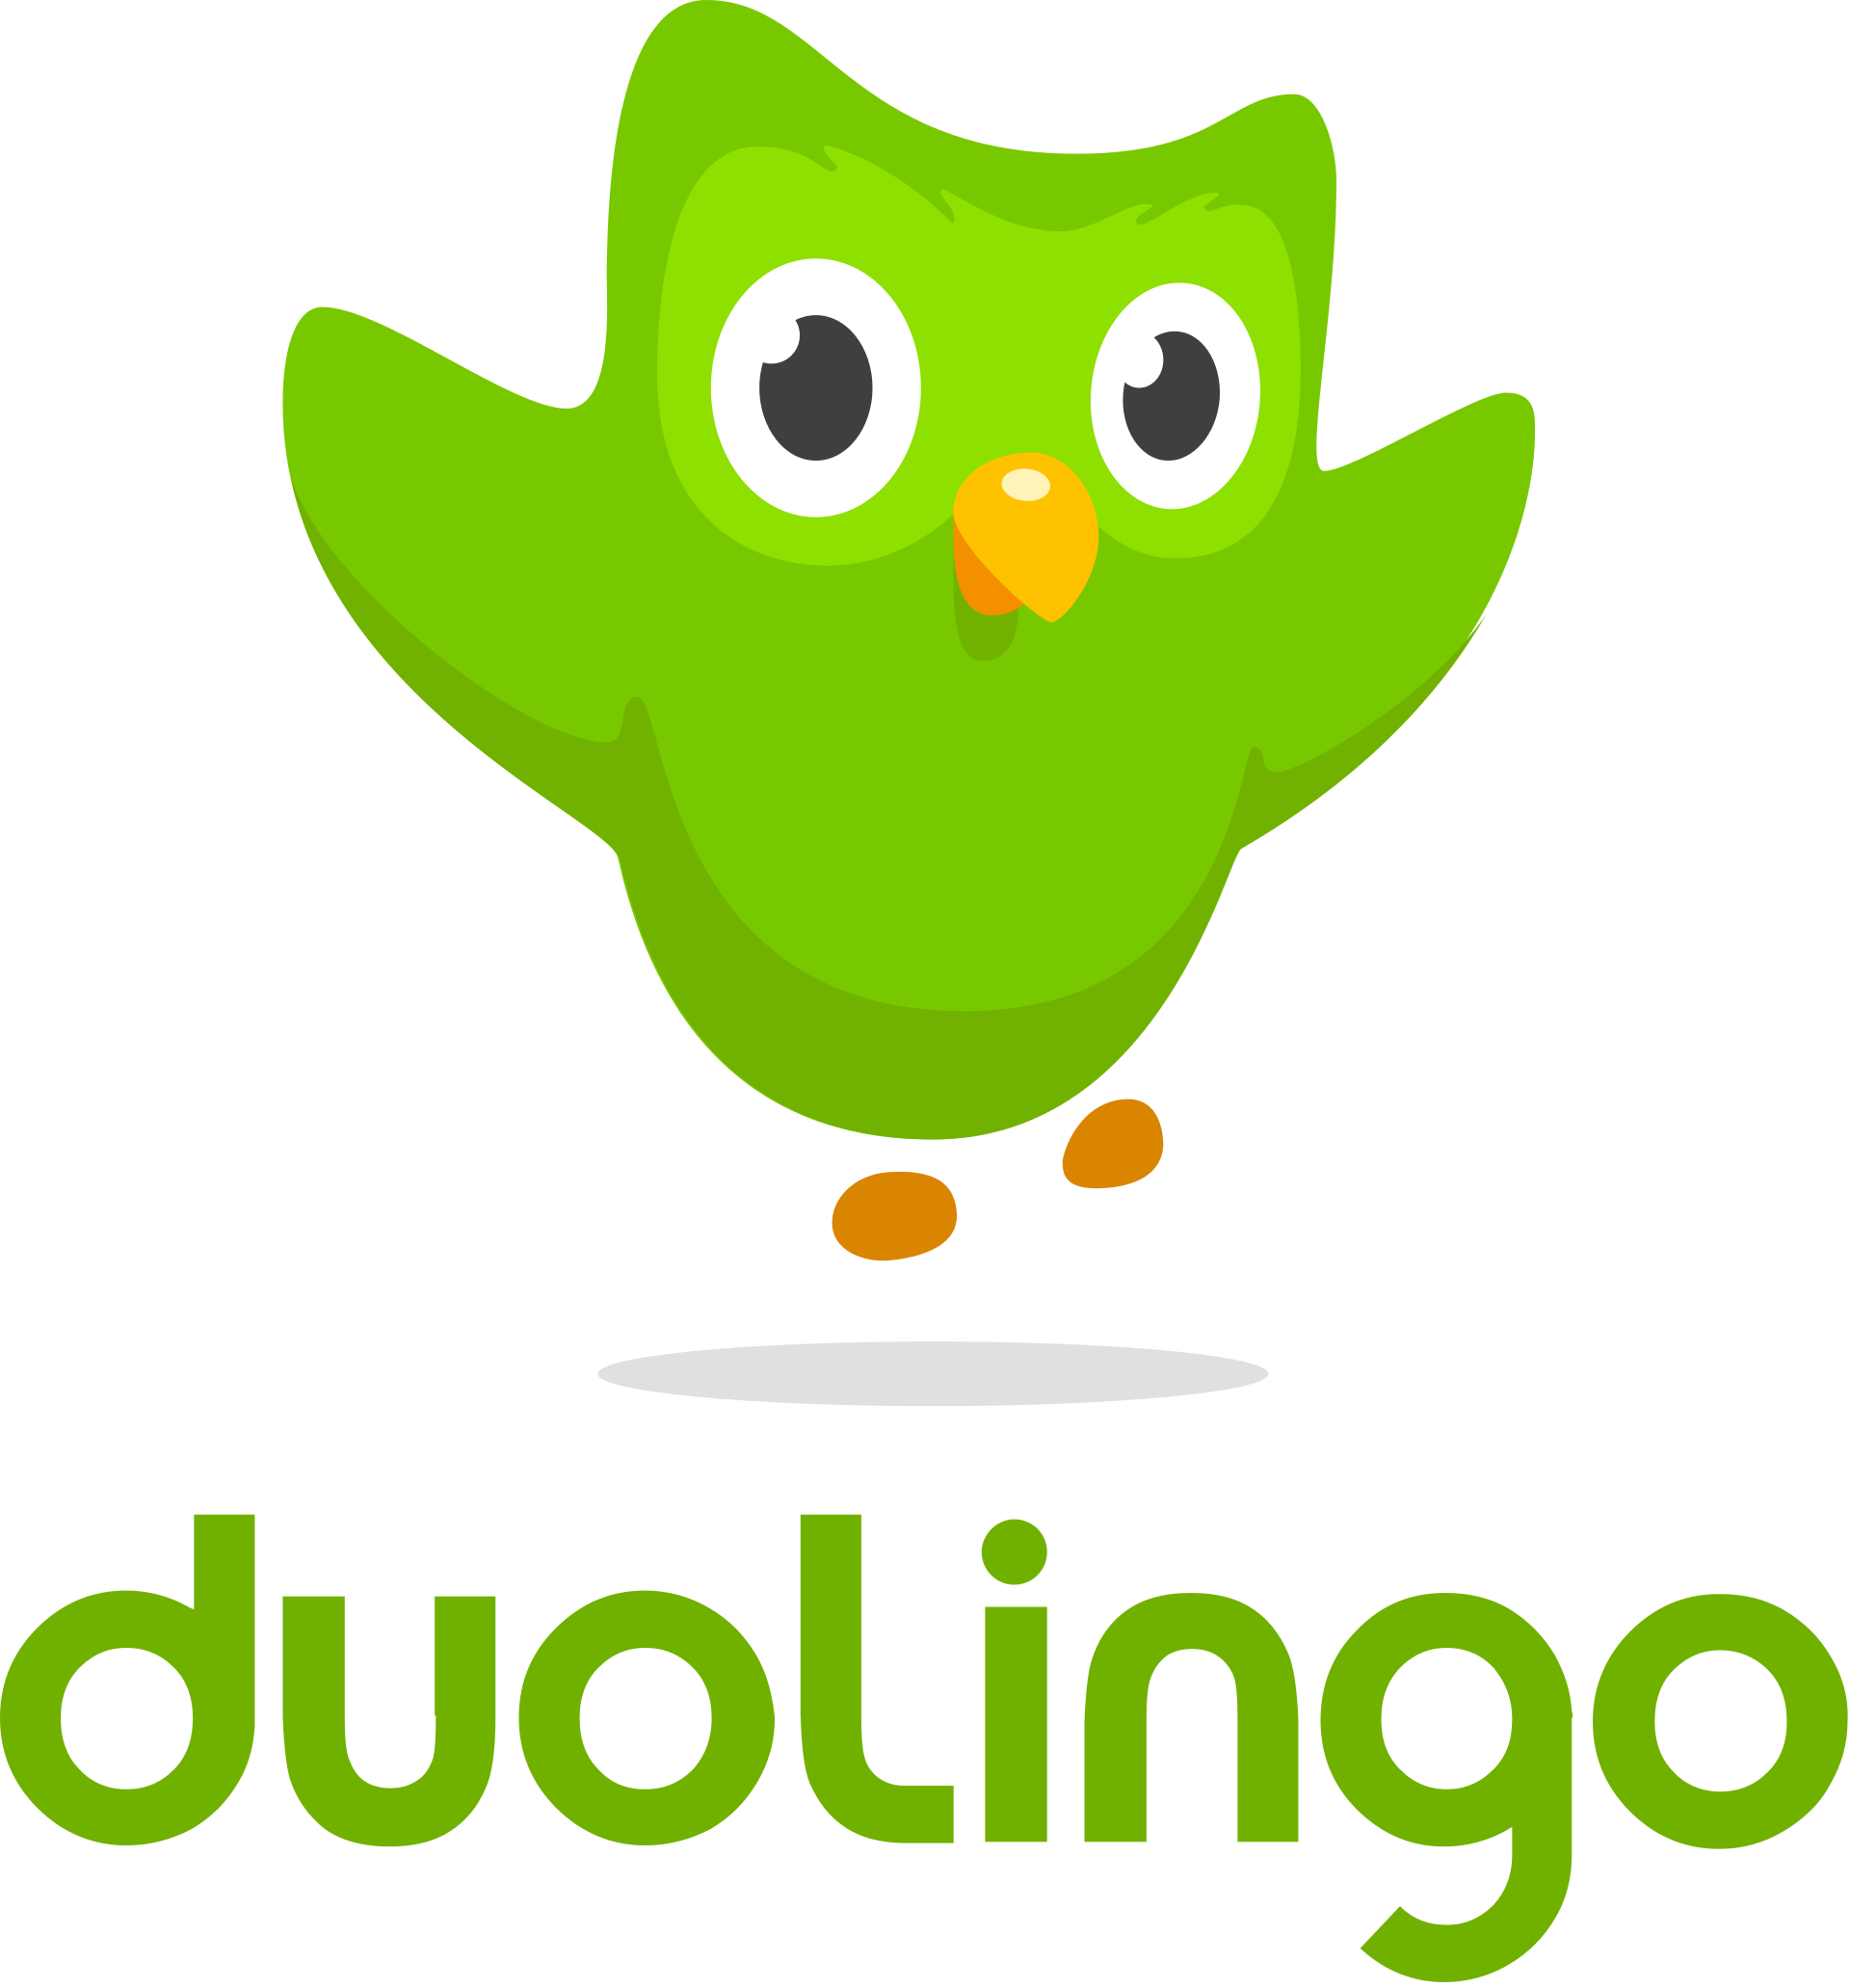 Duolingo_logo_with_owl.png